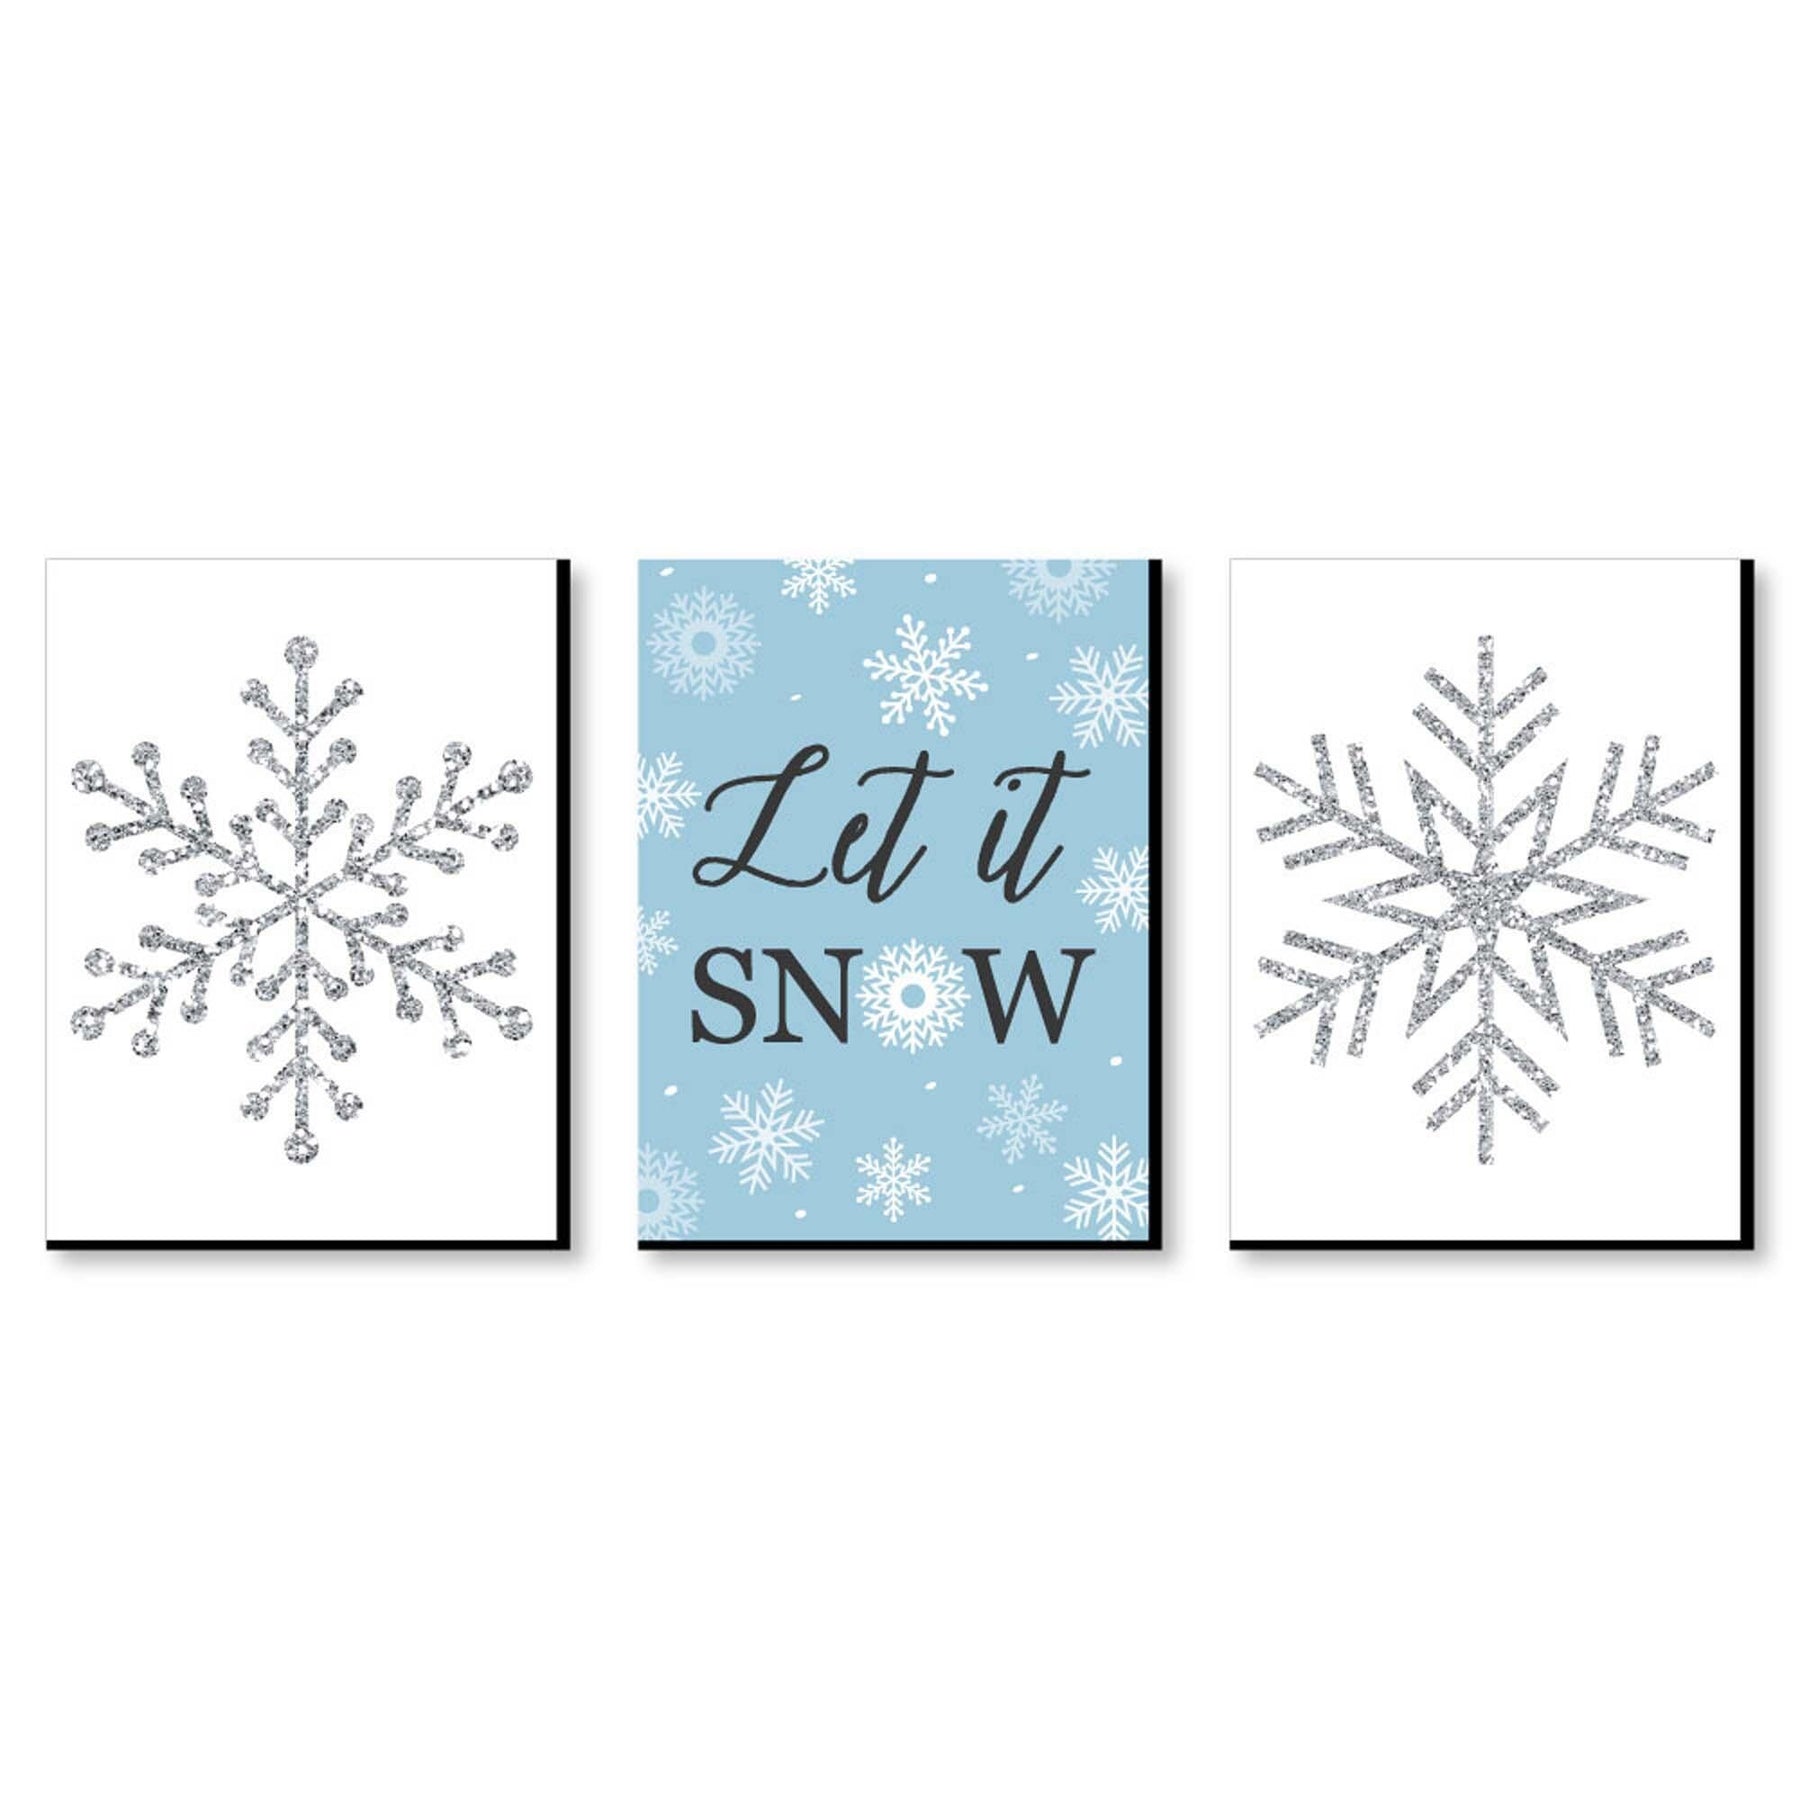 Winter Wonderland - Let It Snow Holiday Wall Art and Blue Snowflake Decor  Ã¢â‚¬â€œ 7.5 x 10 inches - Set of 3 Prints